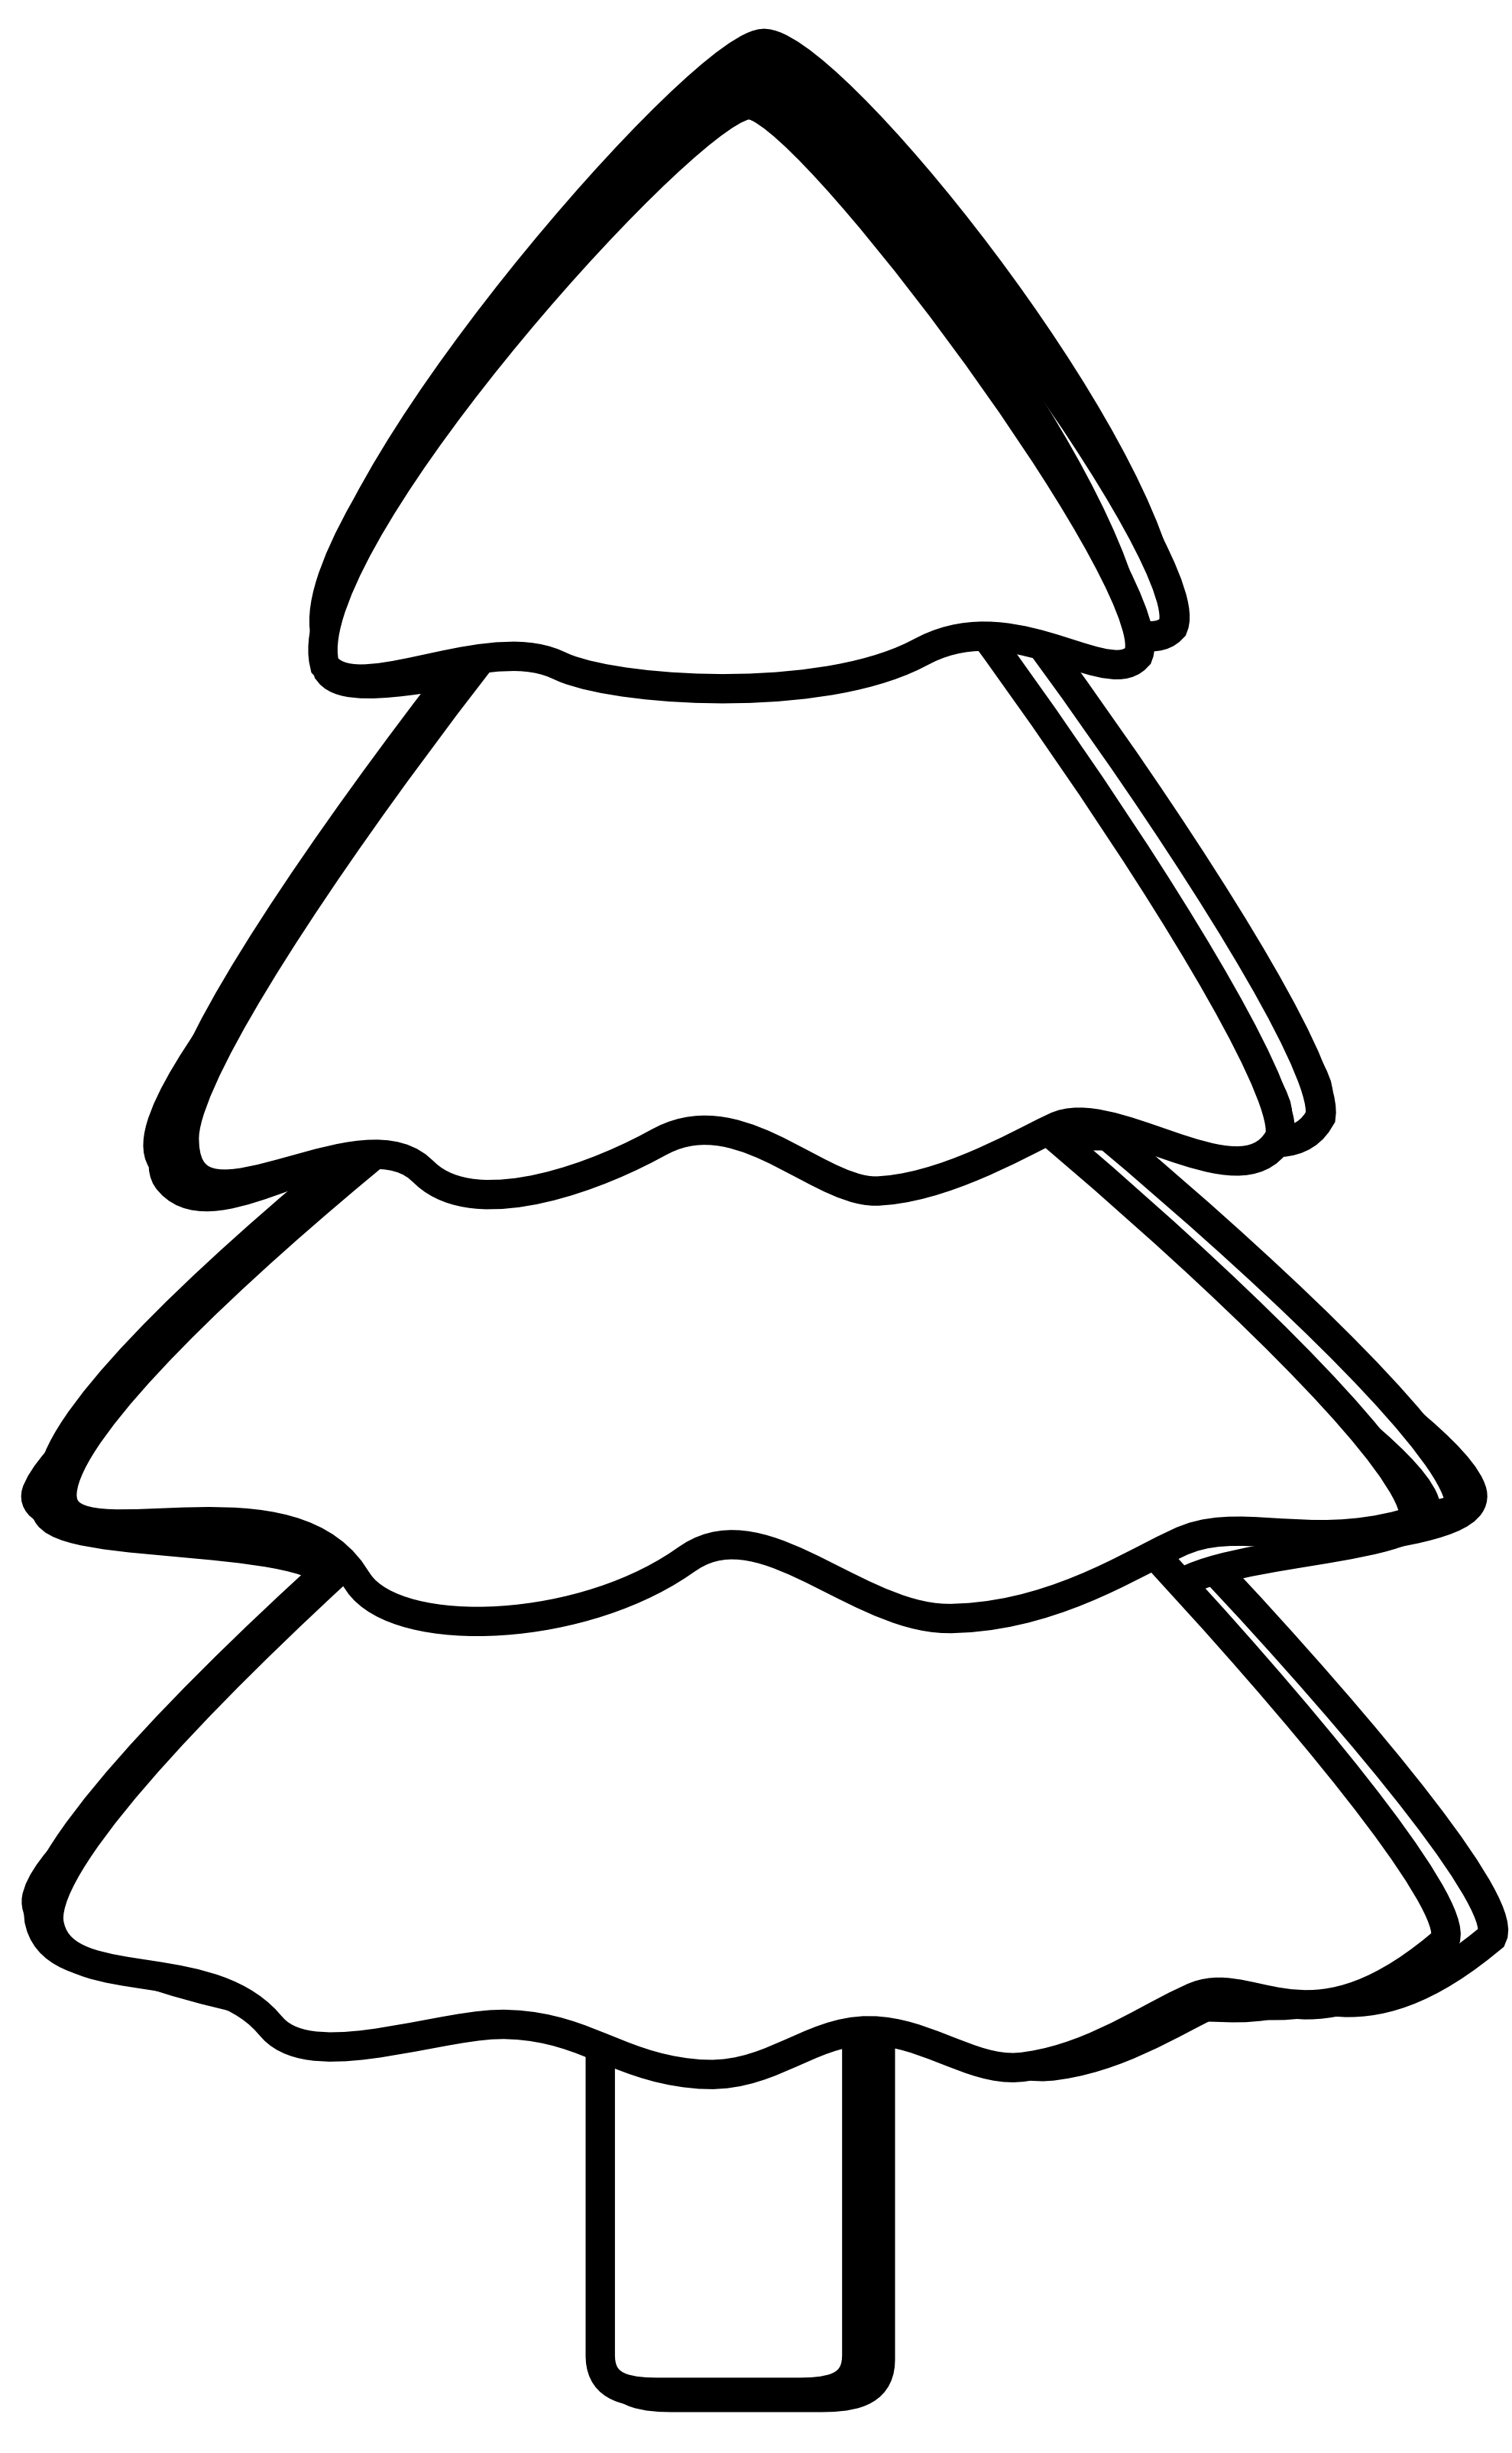 Clipart Christmas Tree Black White | Clipart Panda - Free Clipart ...